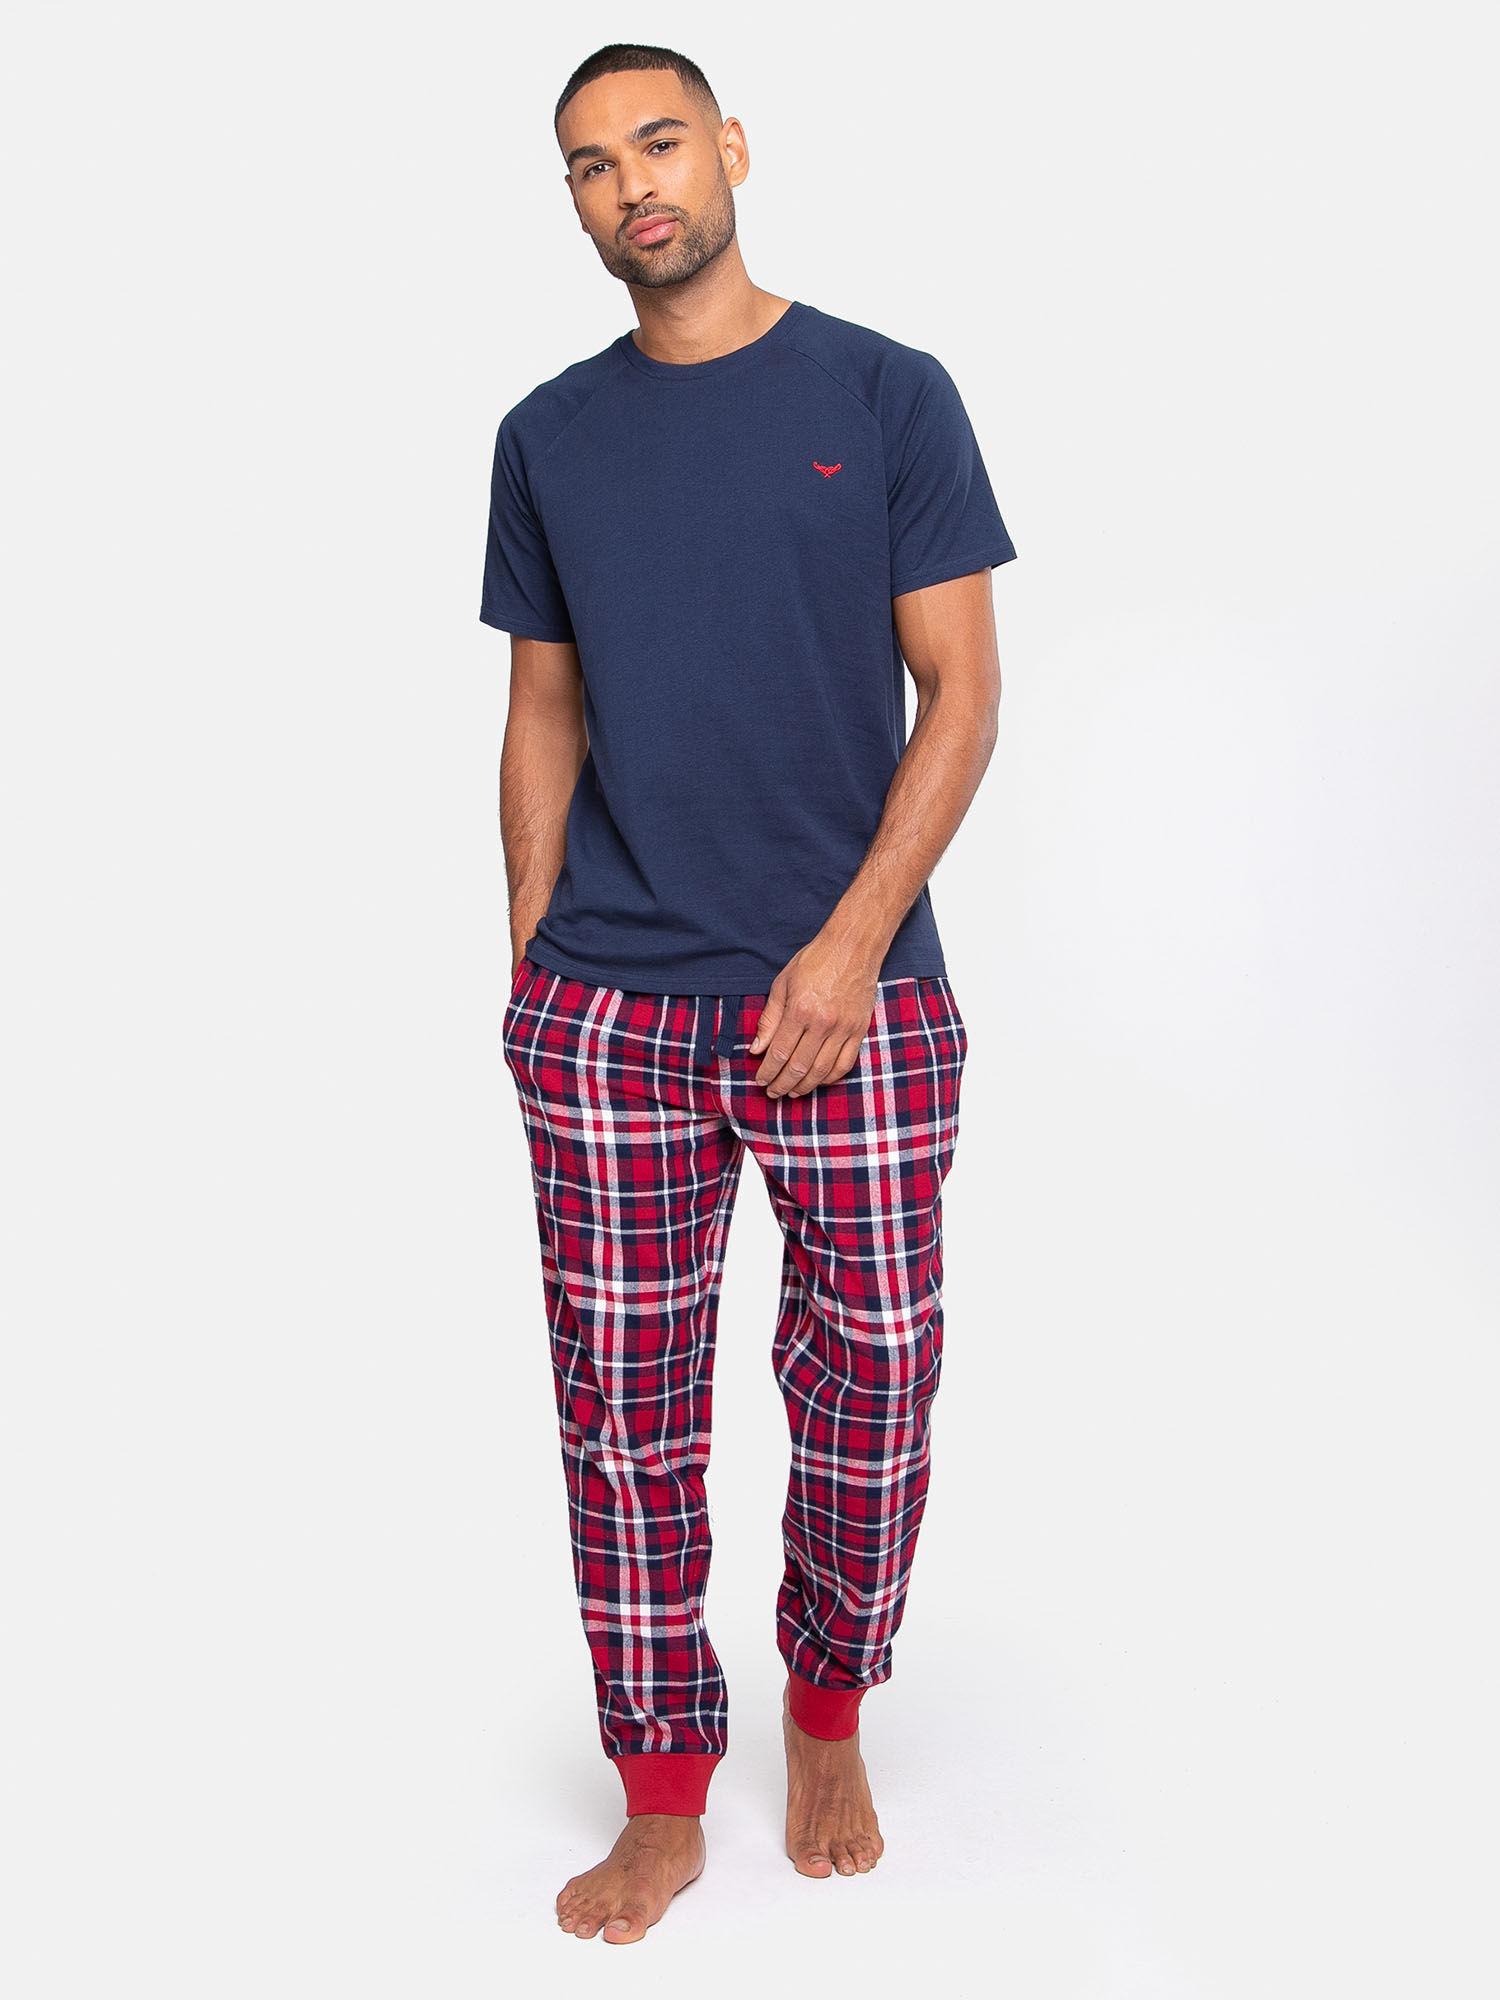 navy & red check pyjama & t-shirt (set of 2)